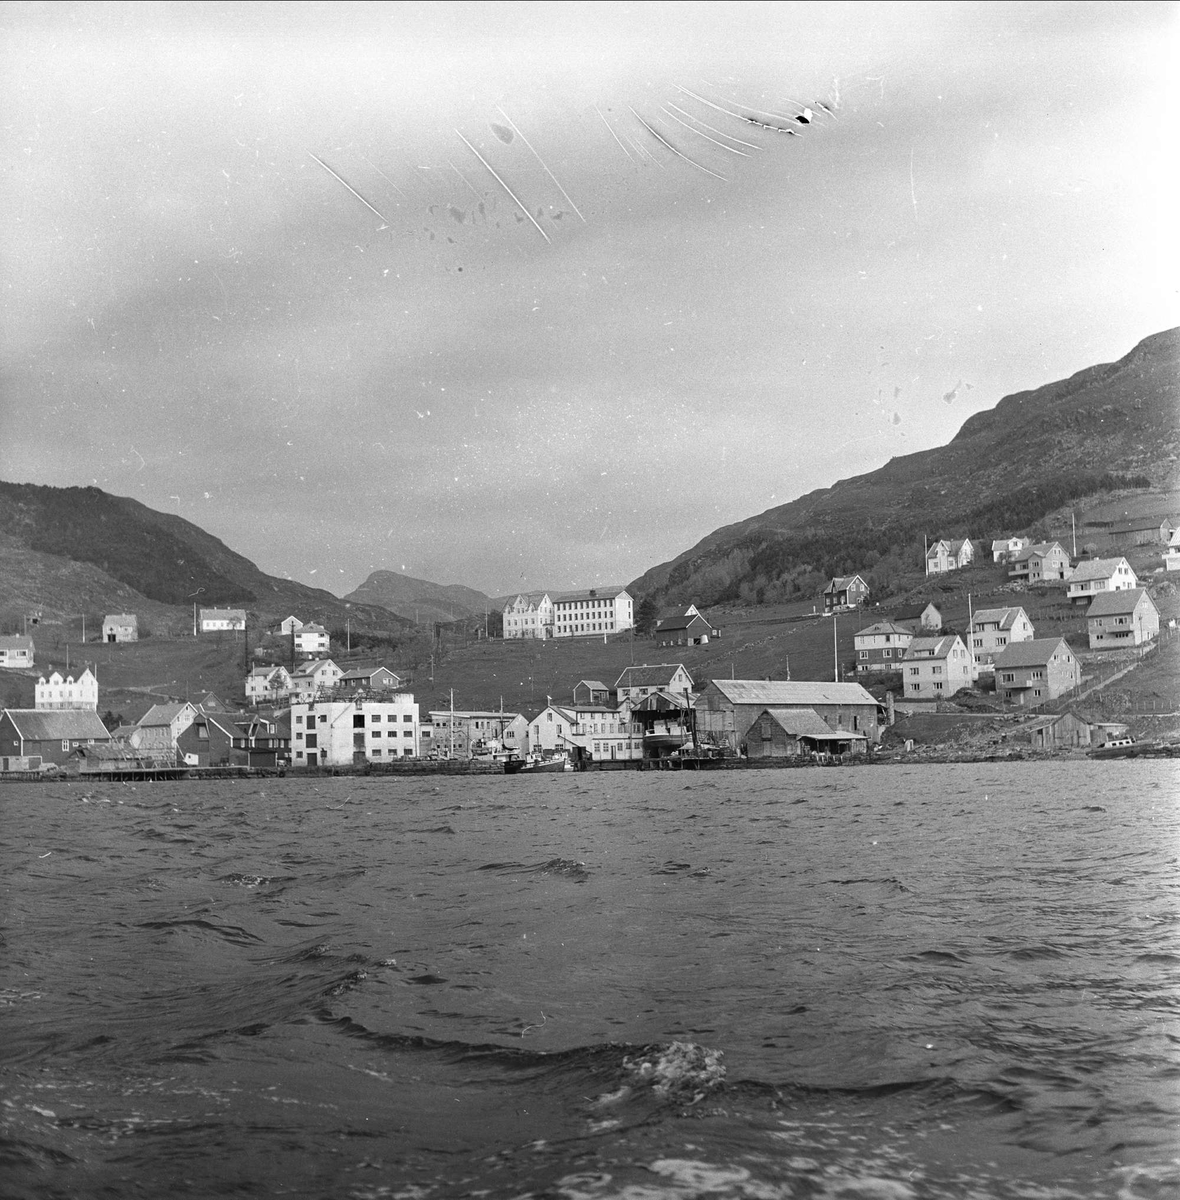 Bilde tatt fra Silda, Vågsøy, Sogn og Fjordane mot Raudeberg på Vågsøya, april 1963.